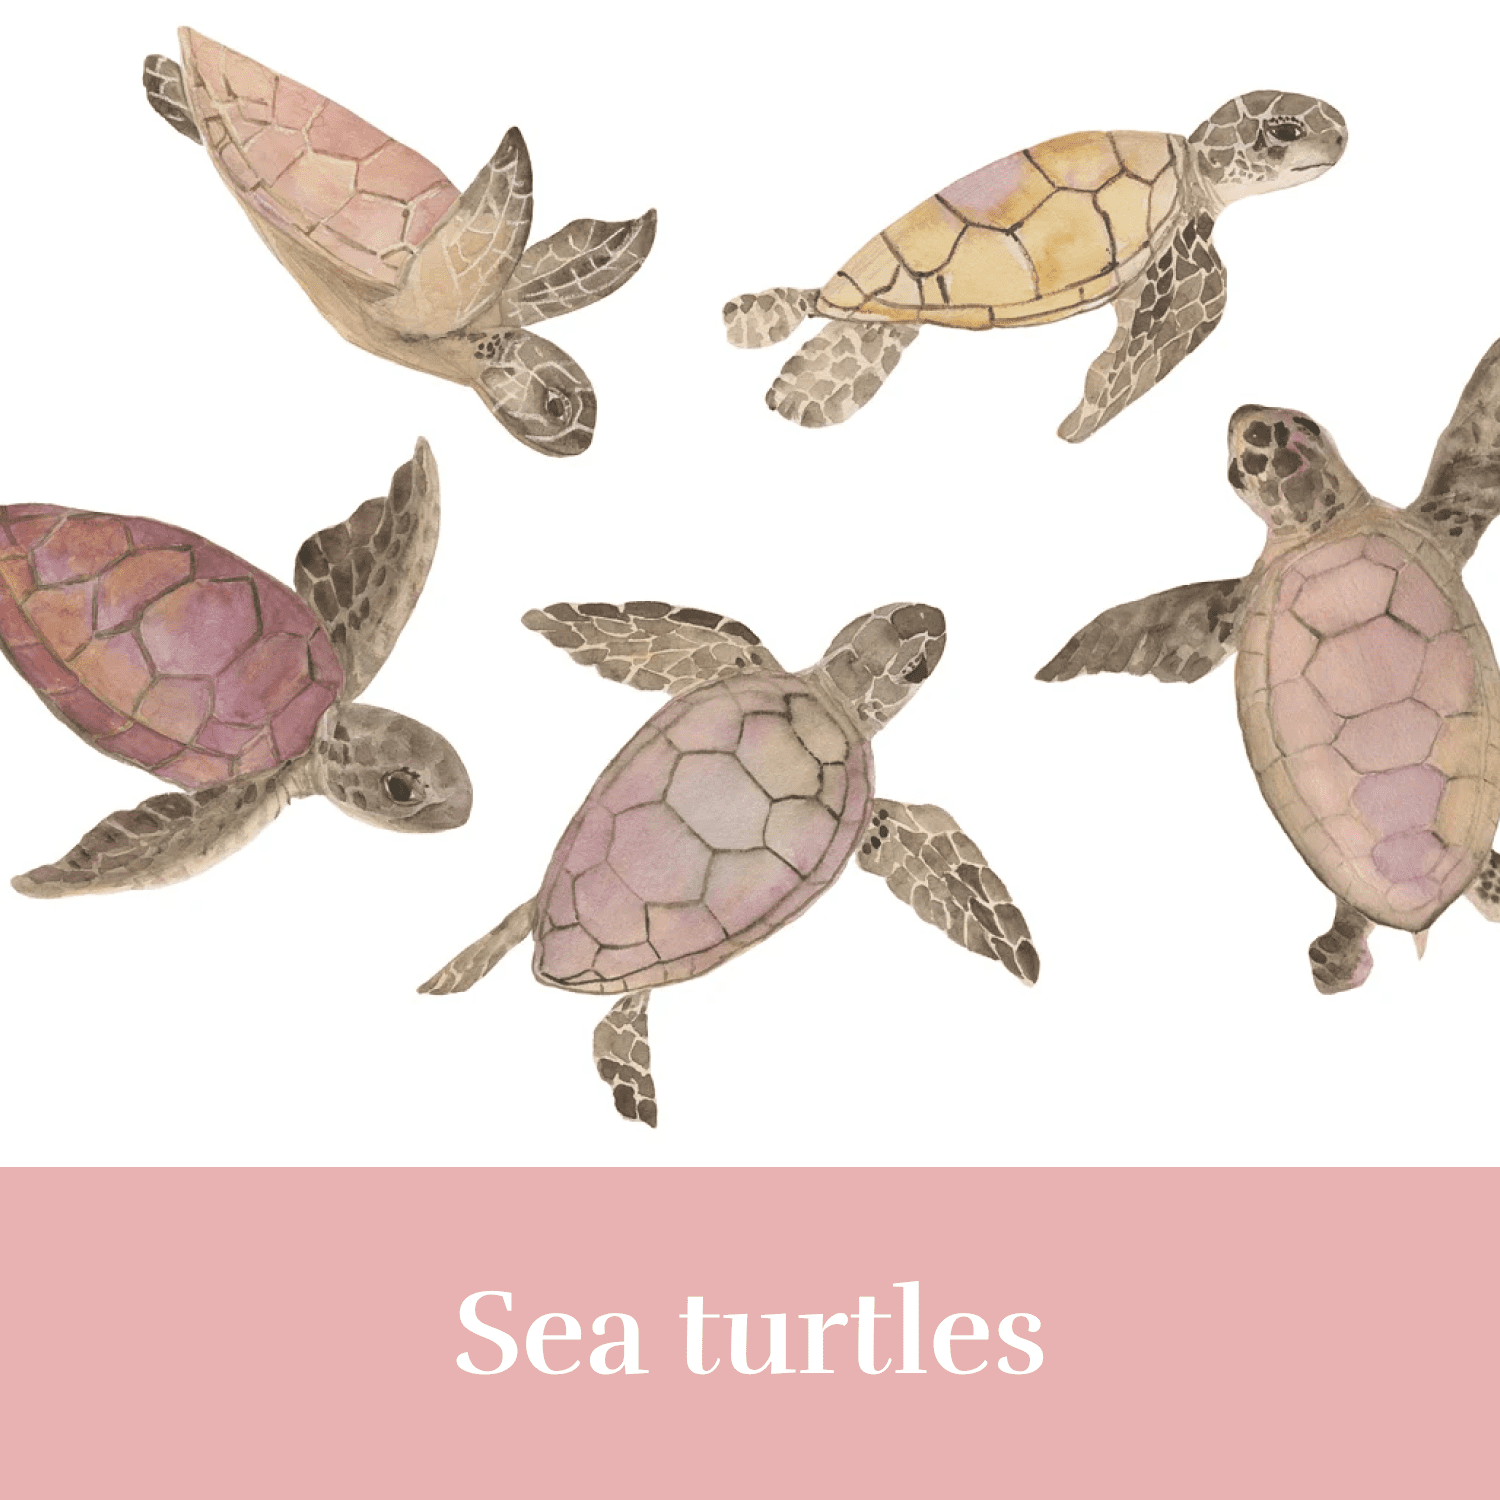 Sea turtles cover.